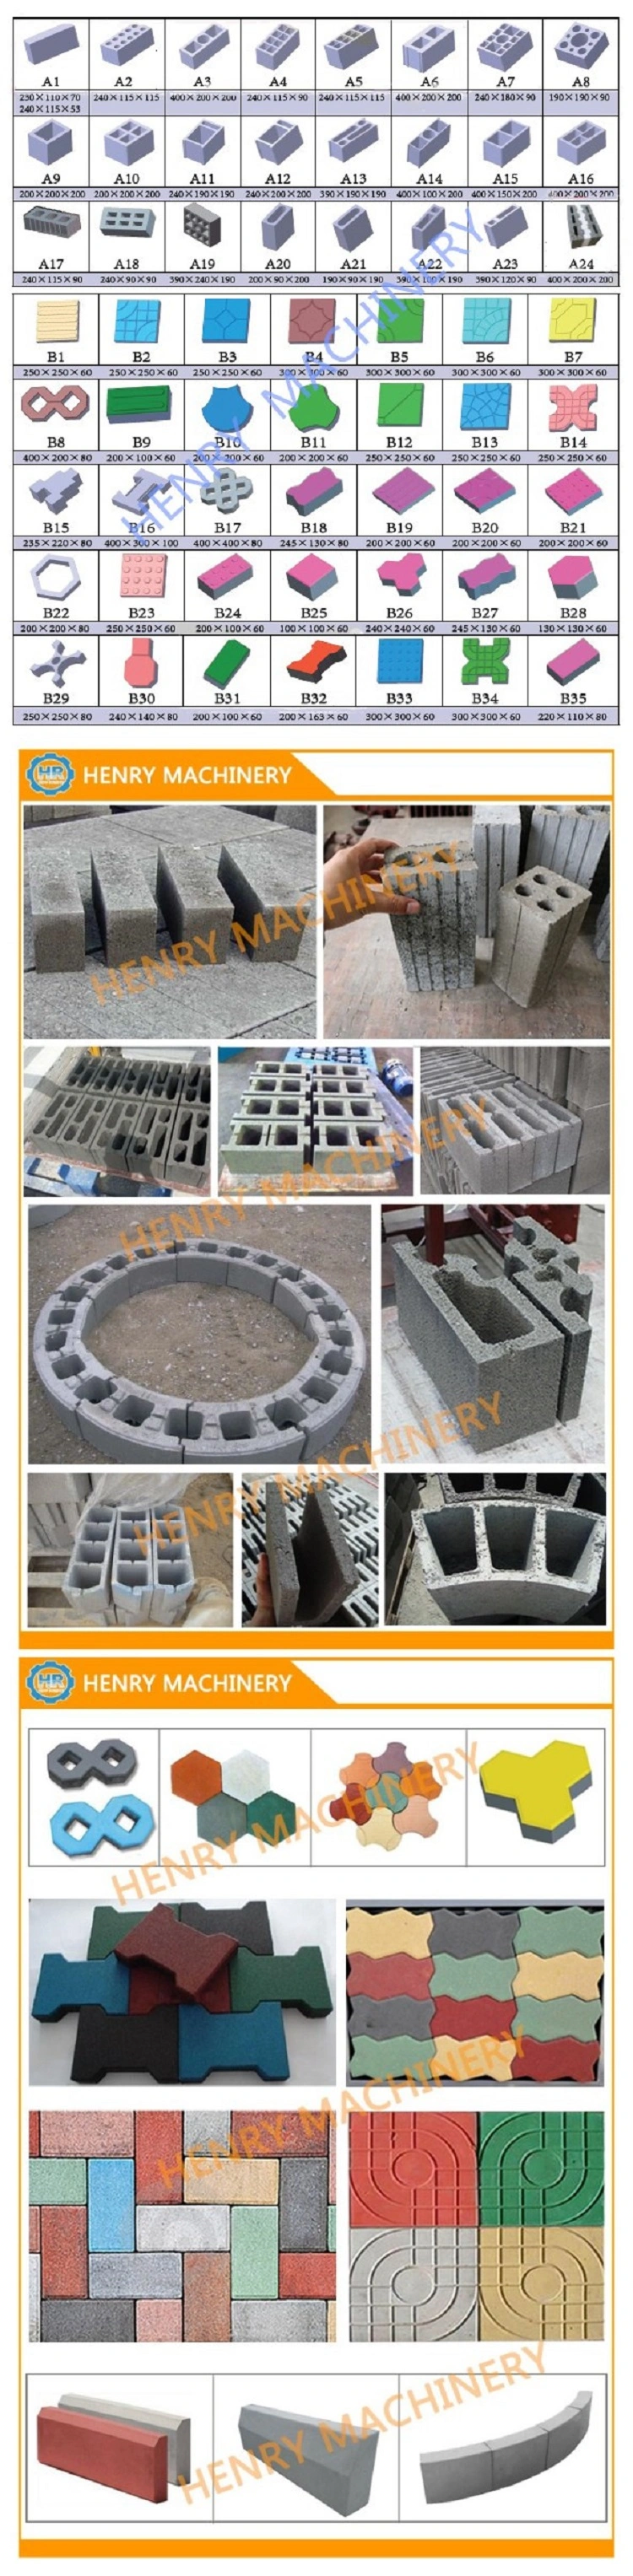 Qt4-20 High Quality Fully Automatic Hydraulic Concrete Hollow Block Making Machine Cement Brick Paver Machine Curbstone Machine